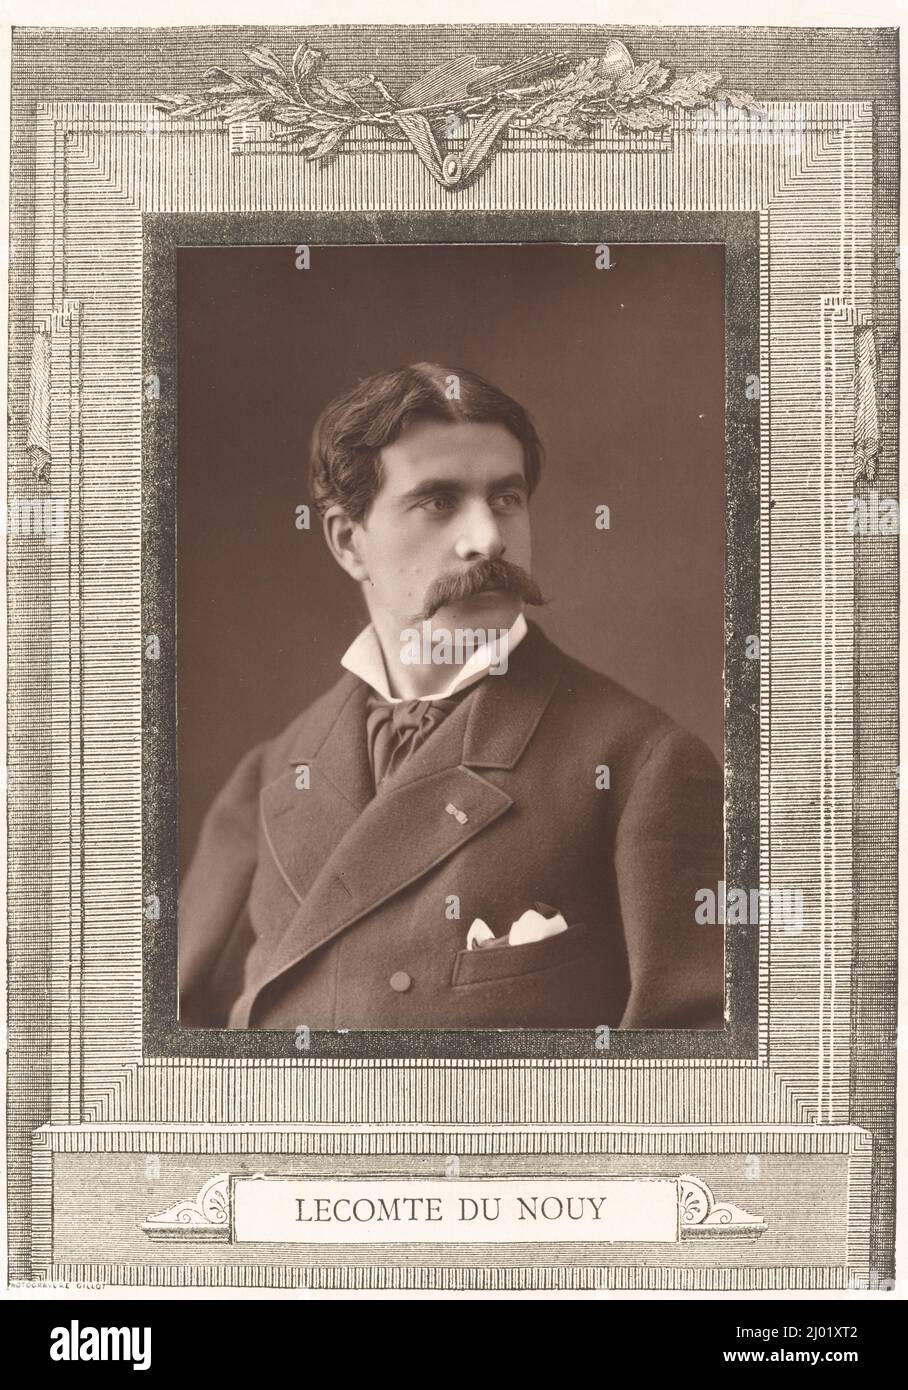 Lecomte du Nouy. Nadar (Gaspard-Félix Tournachon) (France, 1820-1910). France, 1876-1884. Photographs. Woodburytype Stock Photo